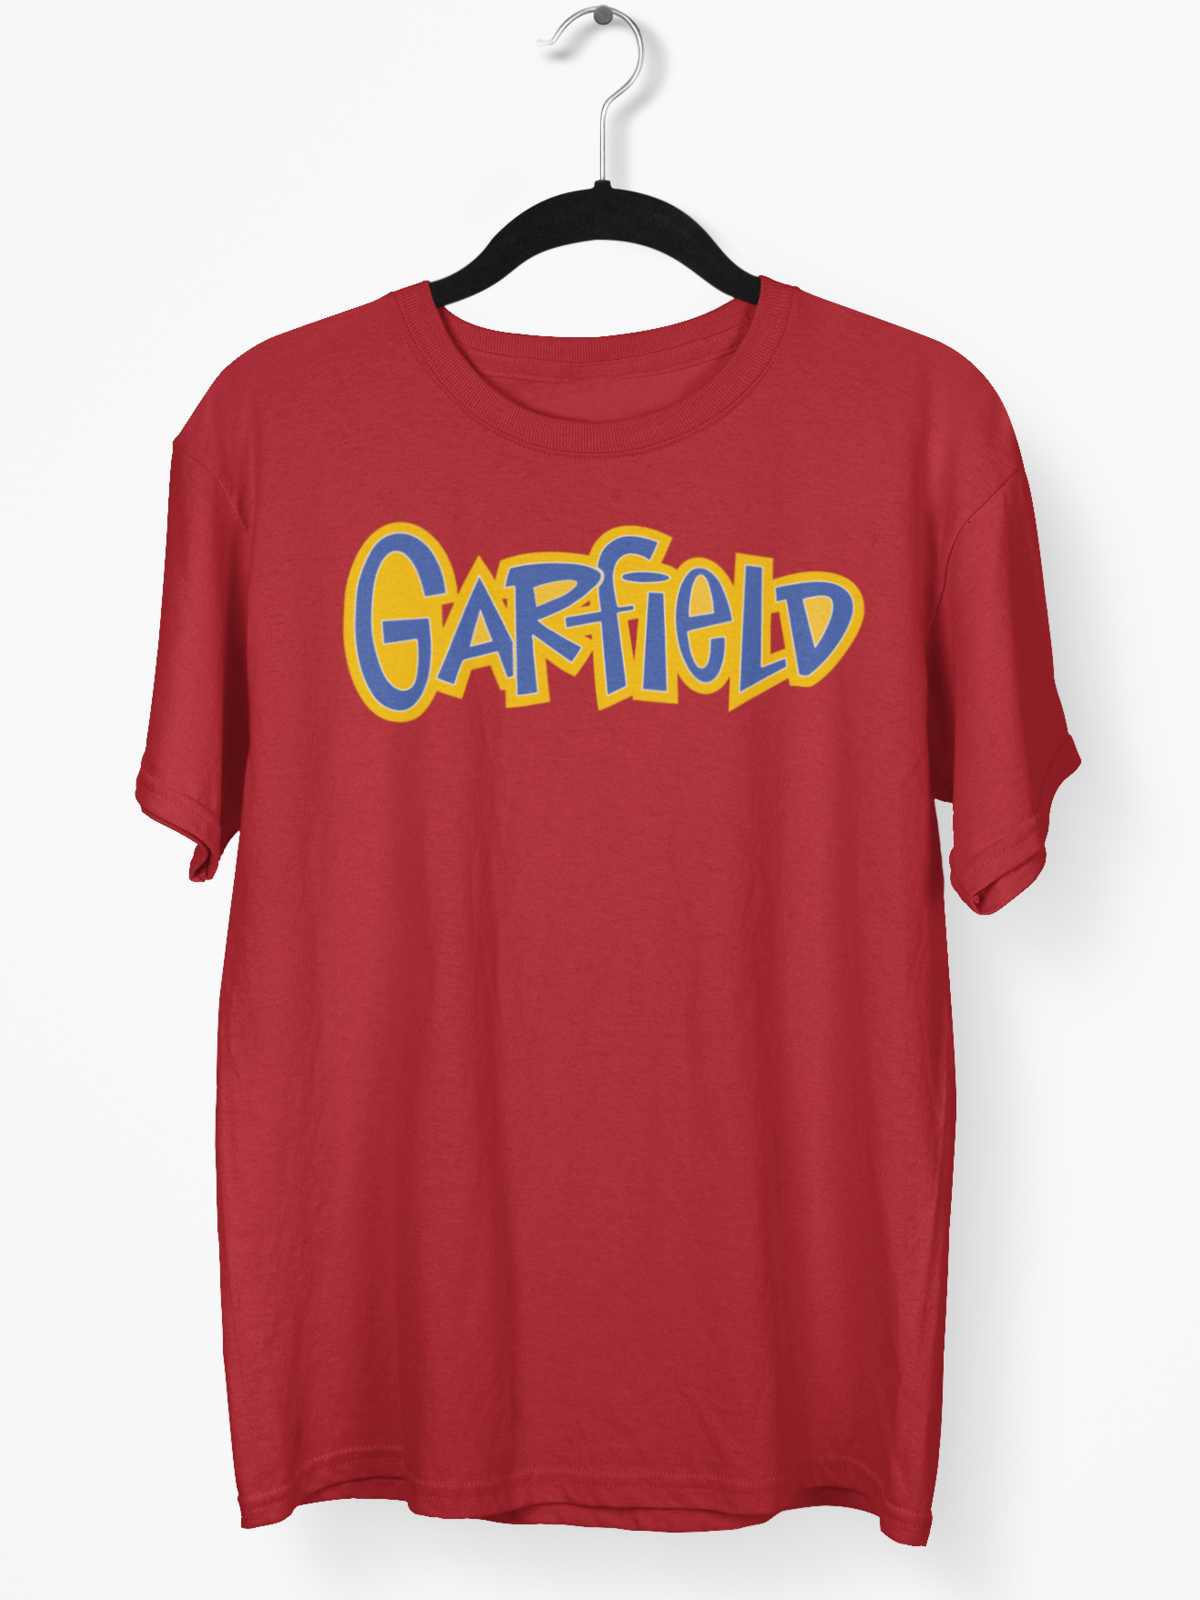 Typography: Garfield